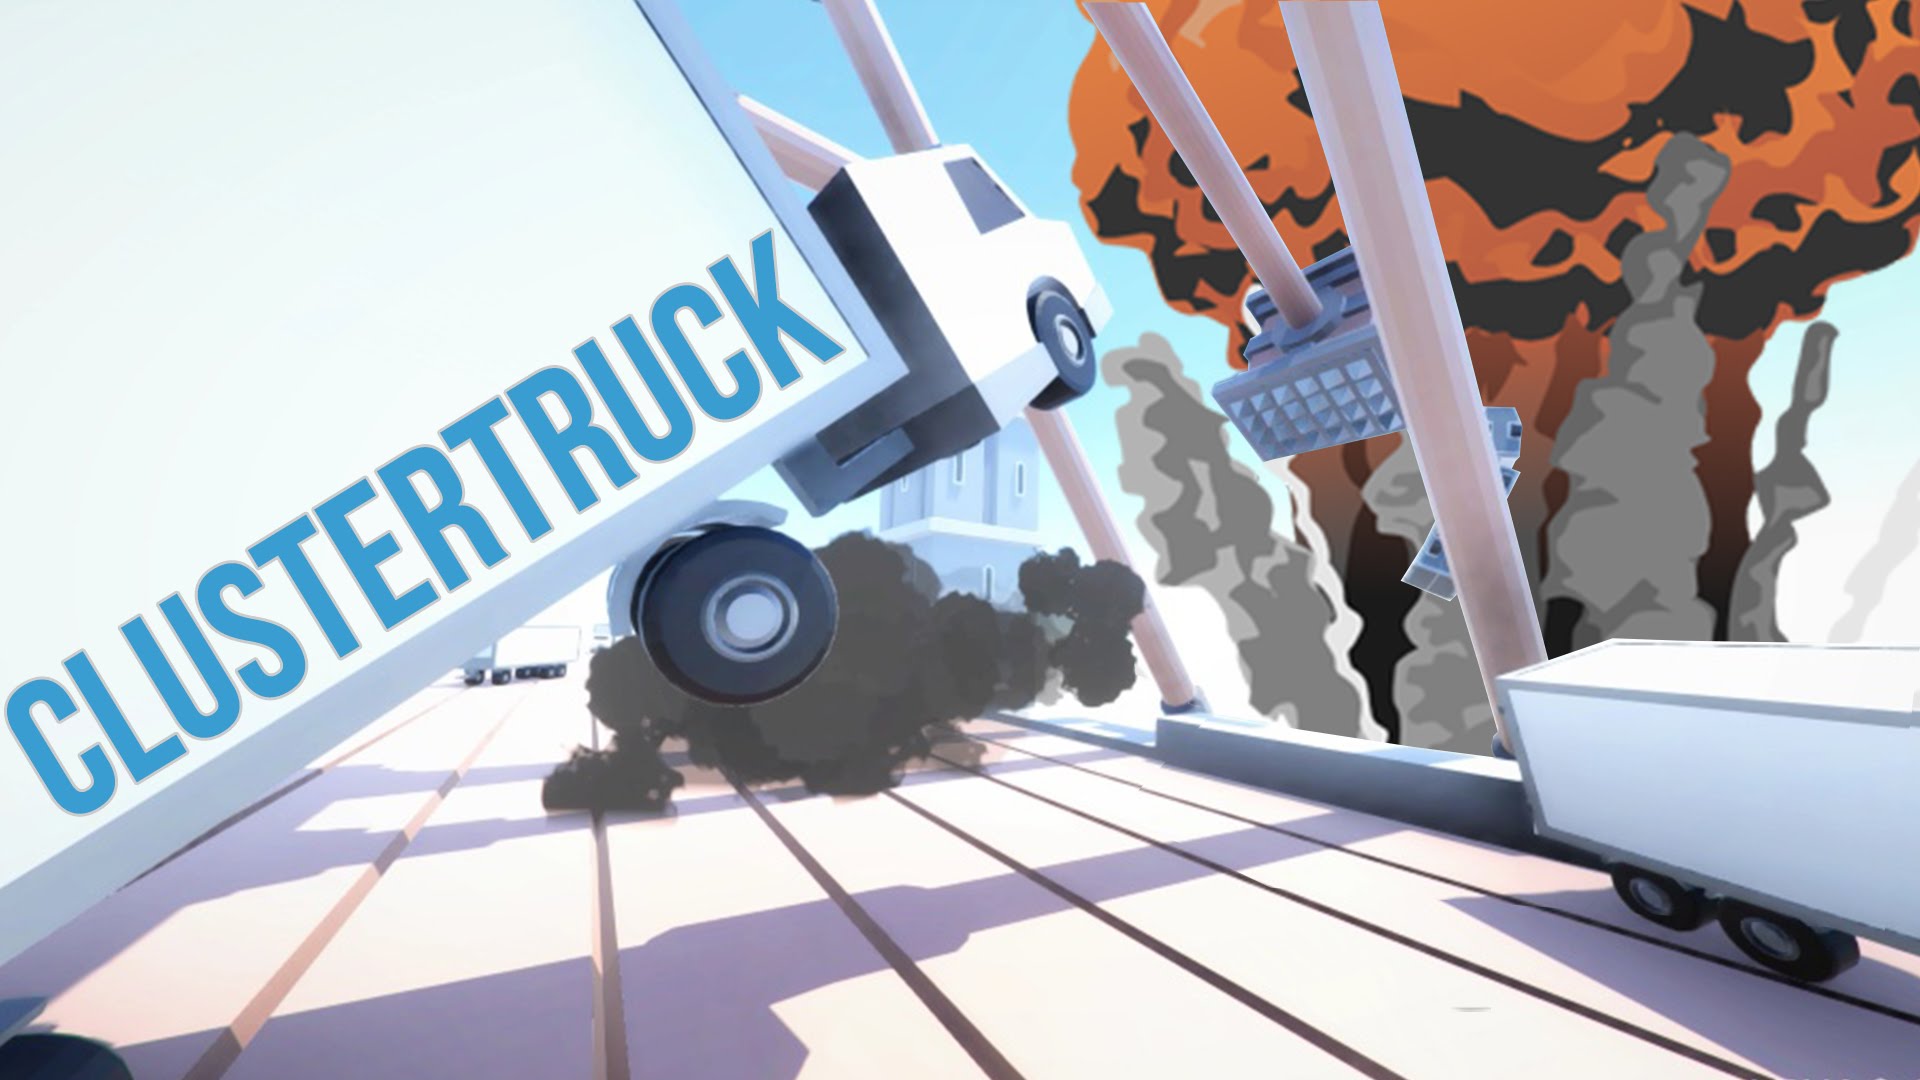 Trailer Truck Surfing Clustertruck To Release September 27th Mxdwn Games